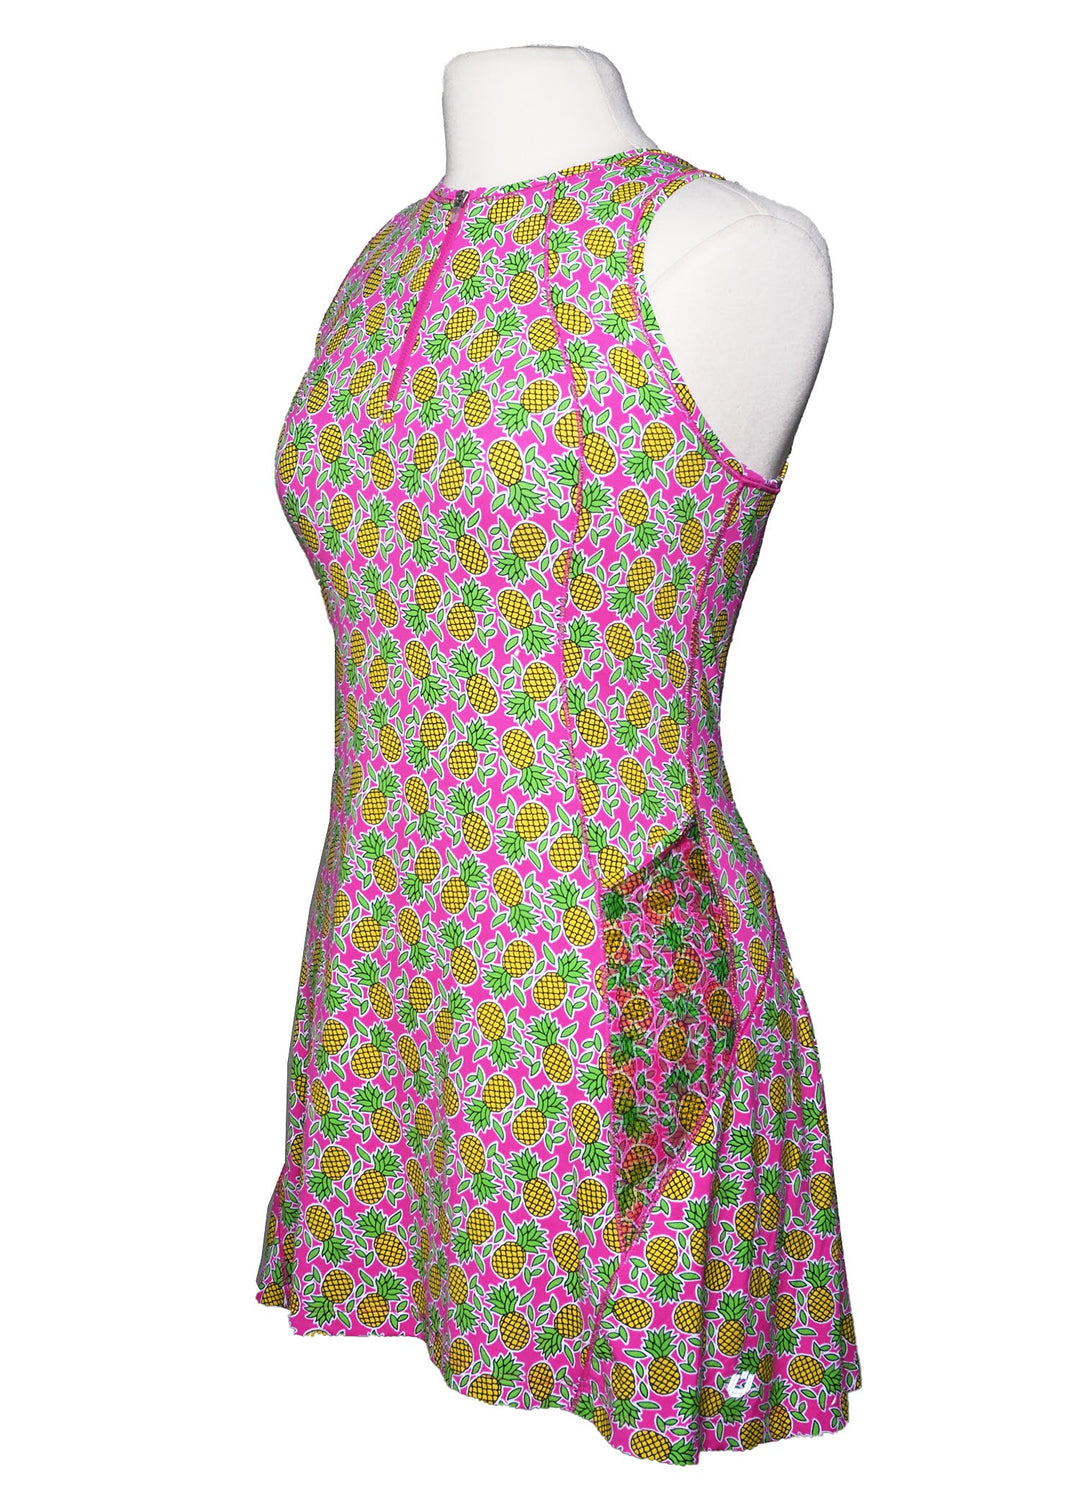 IBKUL Chantal Print Tennis Dress - Hot Pink/Lime - Skorzie